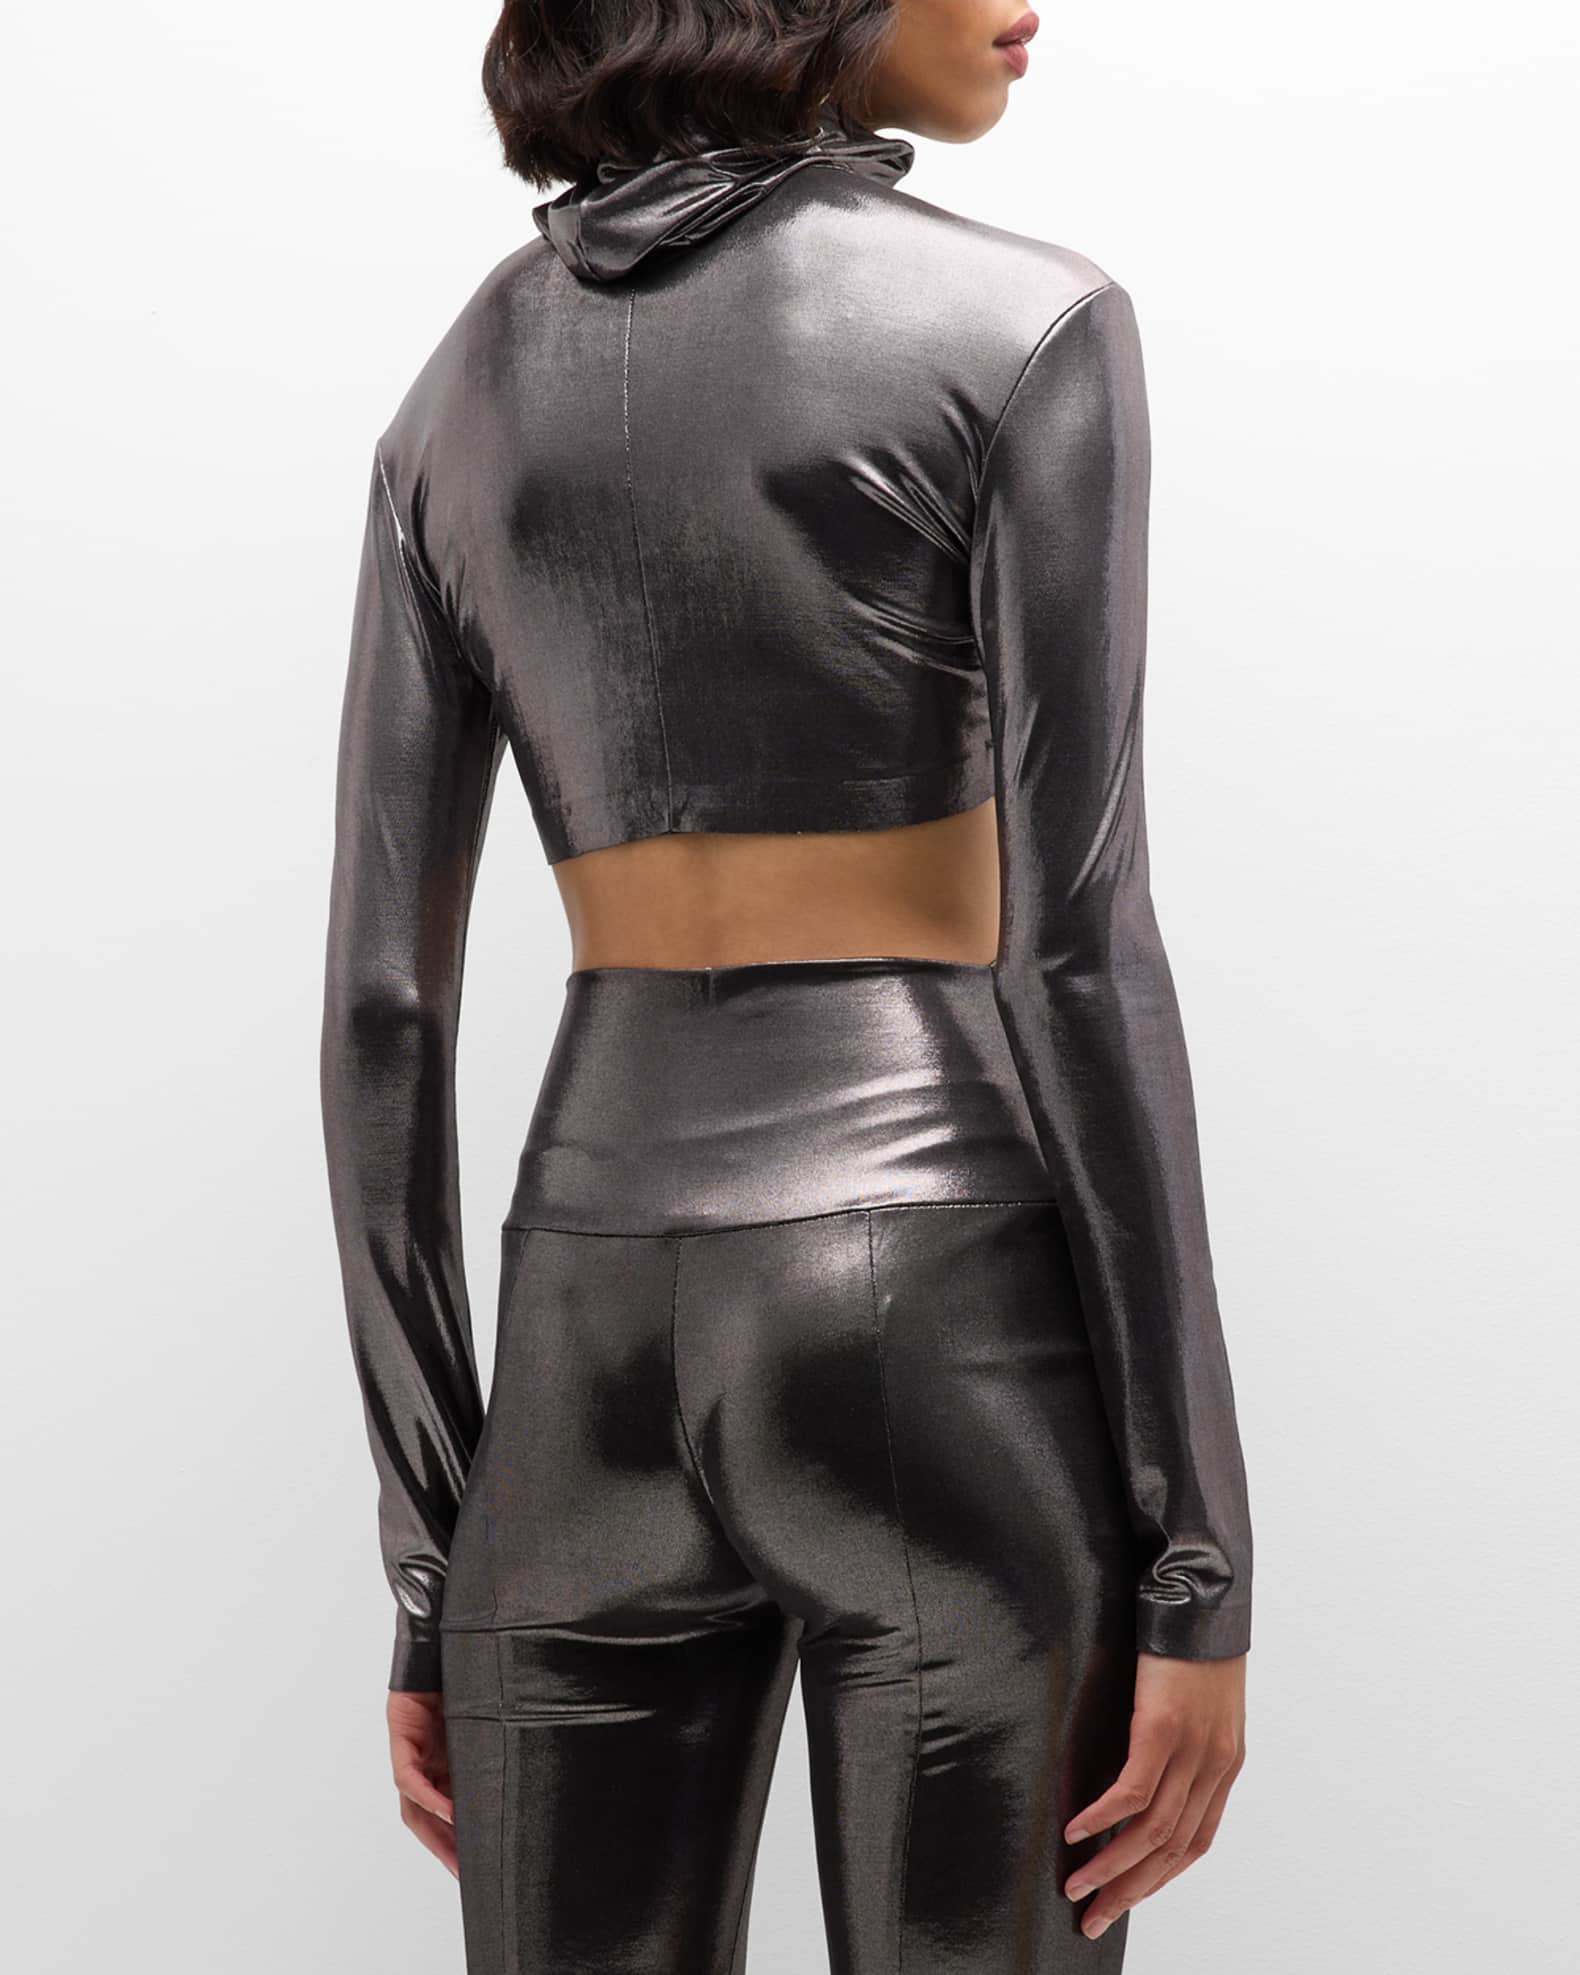 Norma Kamali Women's Long Sleeve Turtleneck Jumpsuit, Black, L